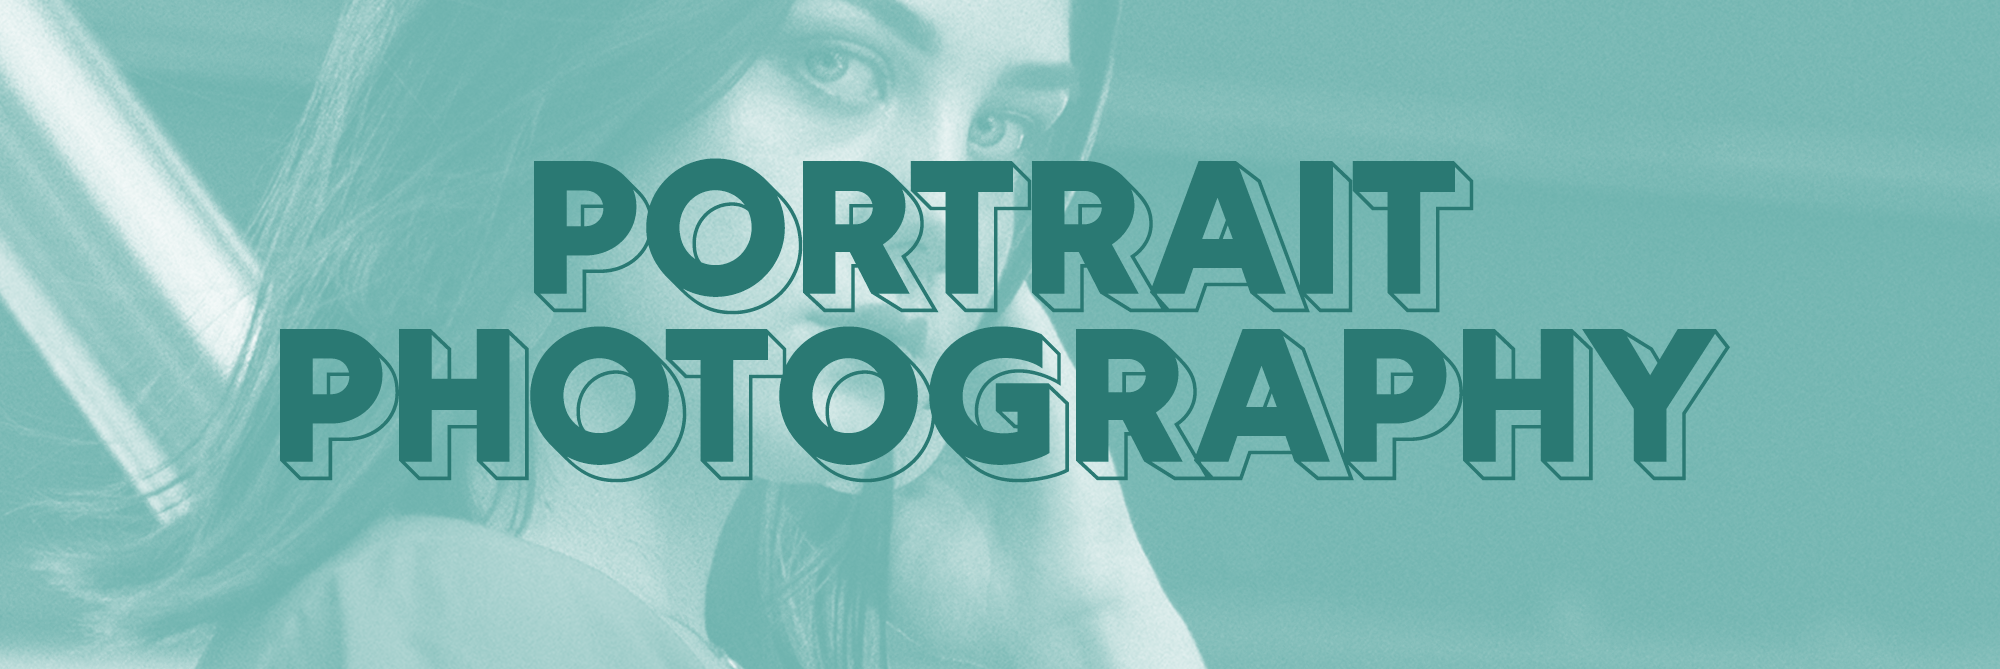 Portrait Photography Banner